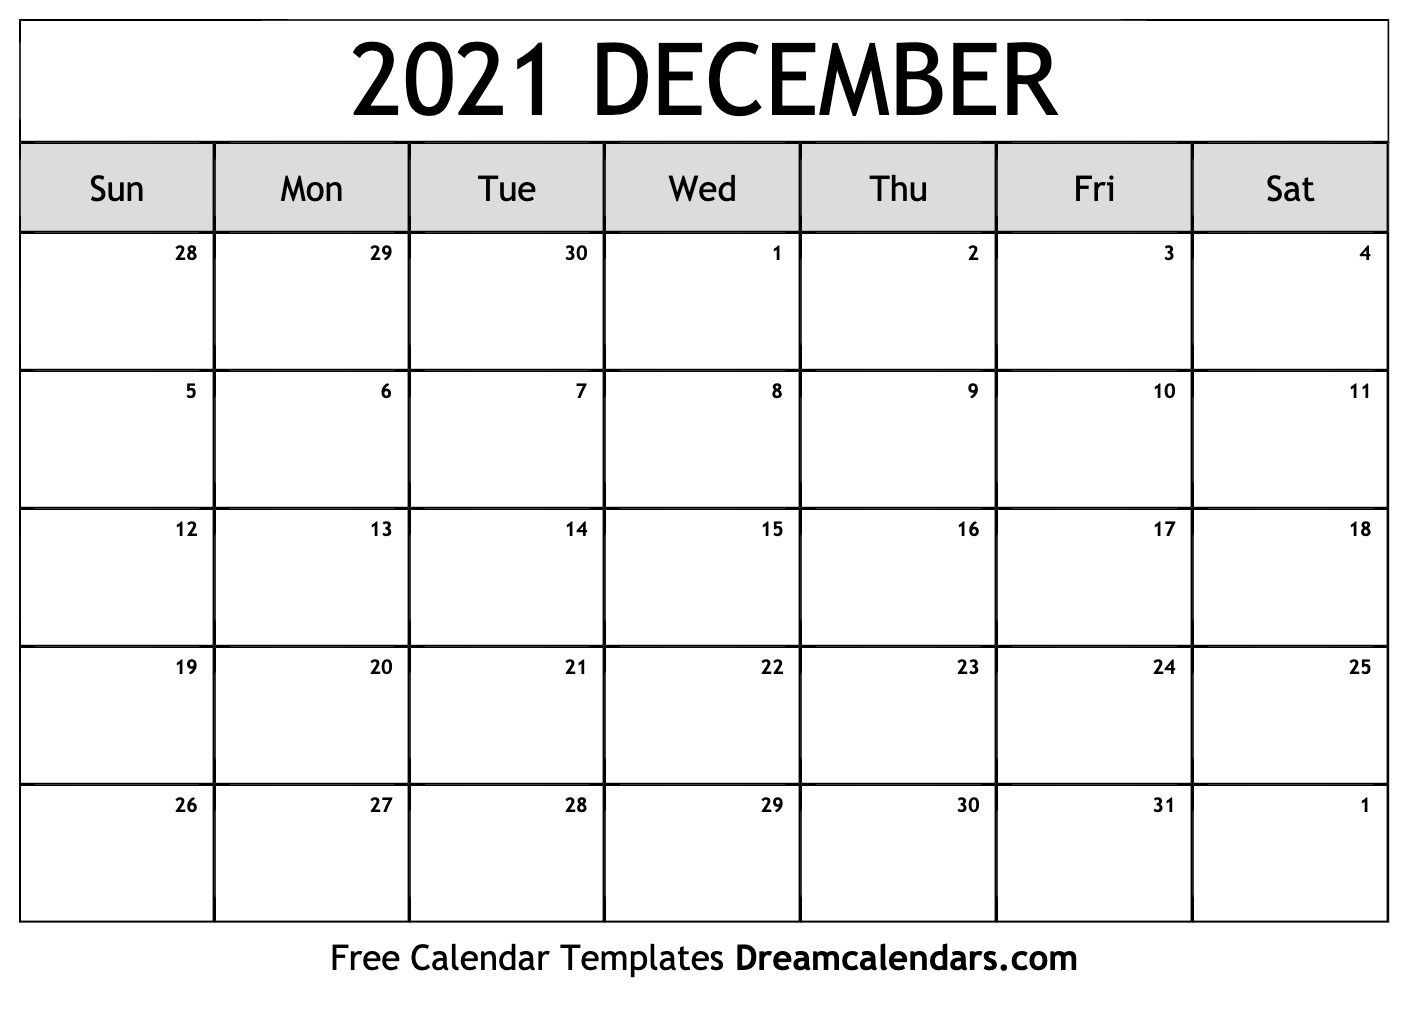 December 2021 Calendar. View the free printable monthly December 2021 calendar and print. Free calendar , Calendar printables, Printable calendar